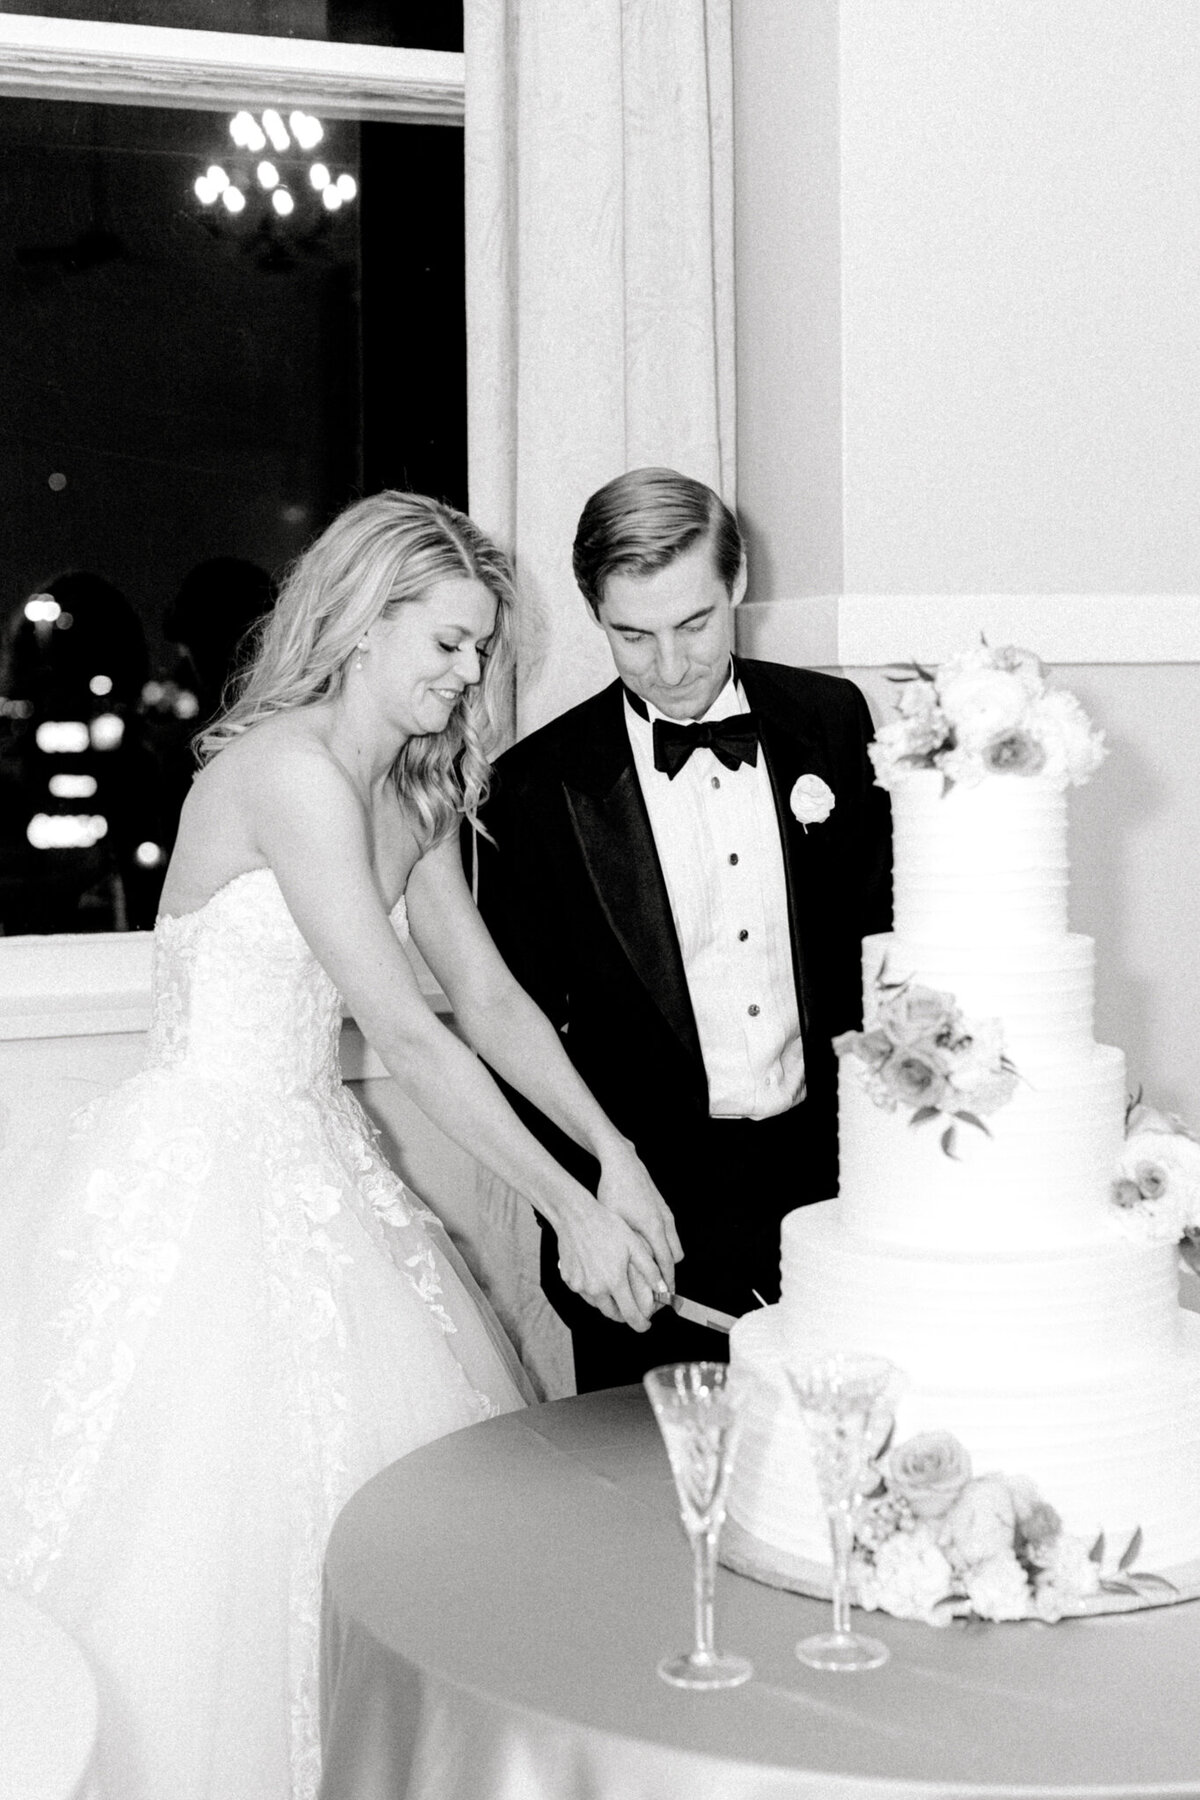 Shelby & Thomas's Wedding at HPUMC The Room on Main | Dallas Wedding Photographer | Sami Kathryn Photography-209